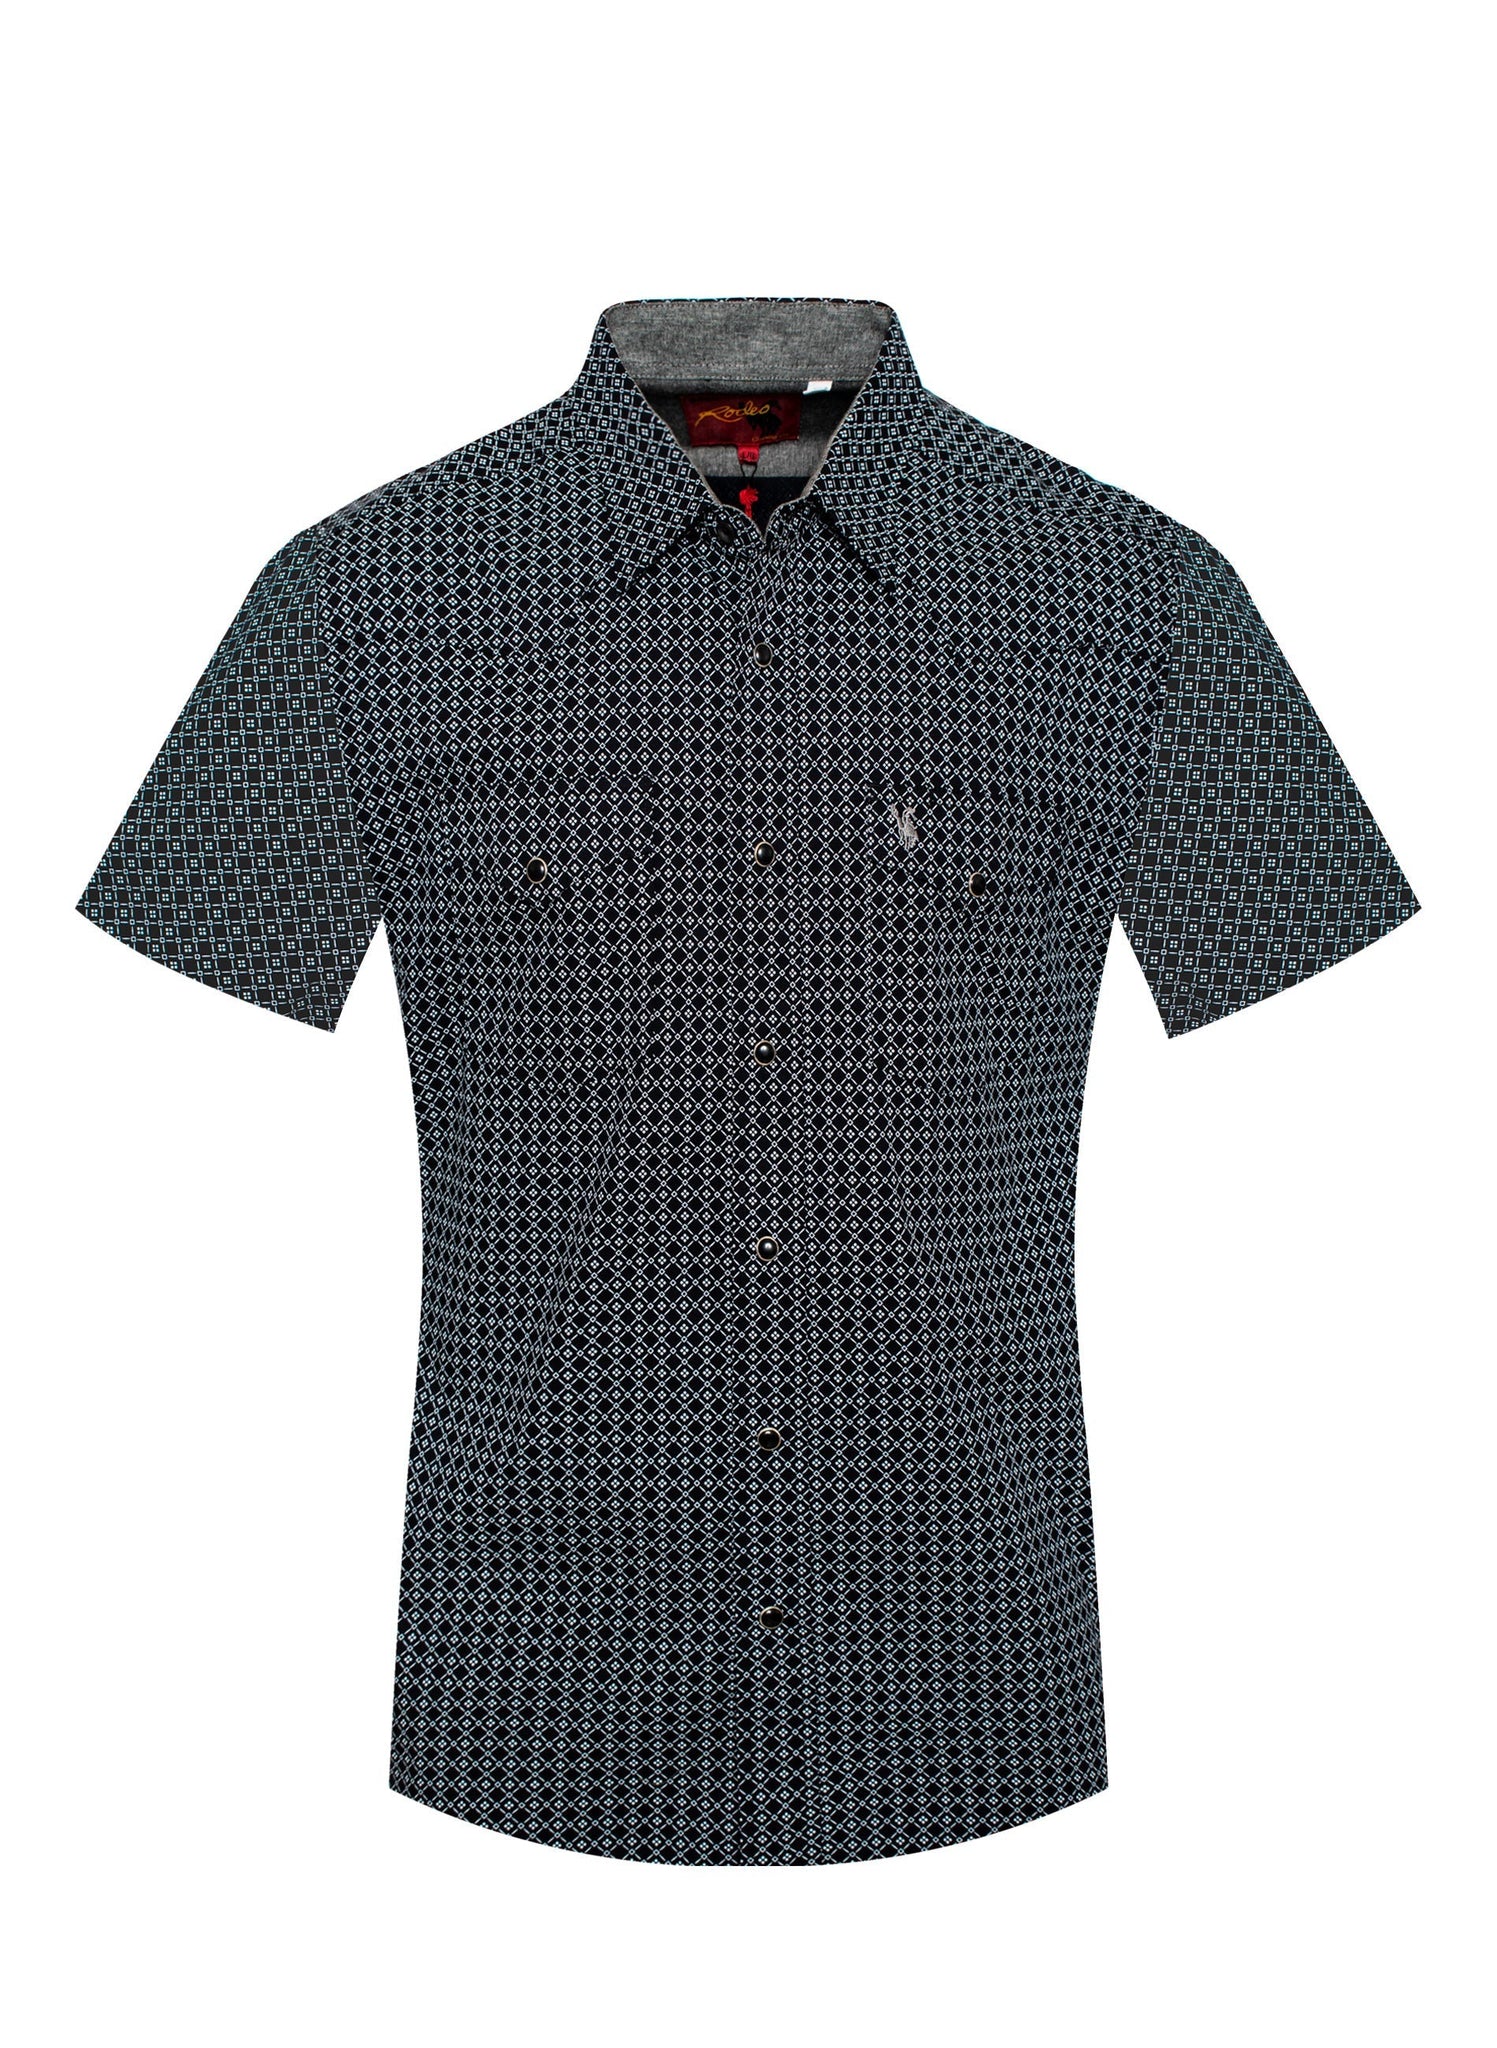 Men's Short Sleeve Pearl Snap Print Shirt -PS100S-141